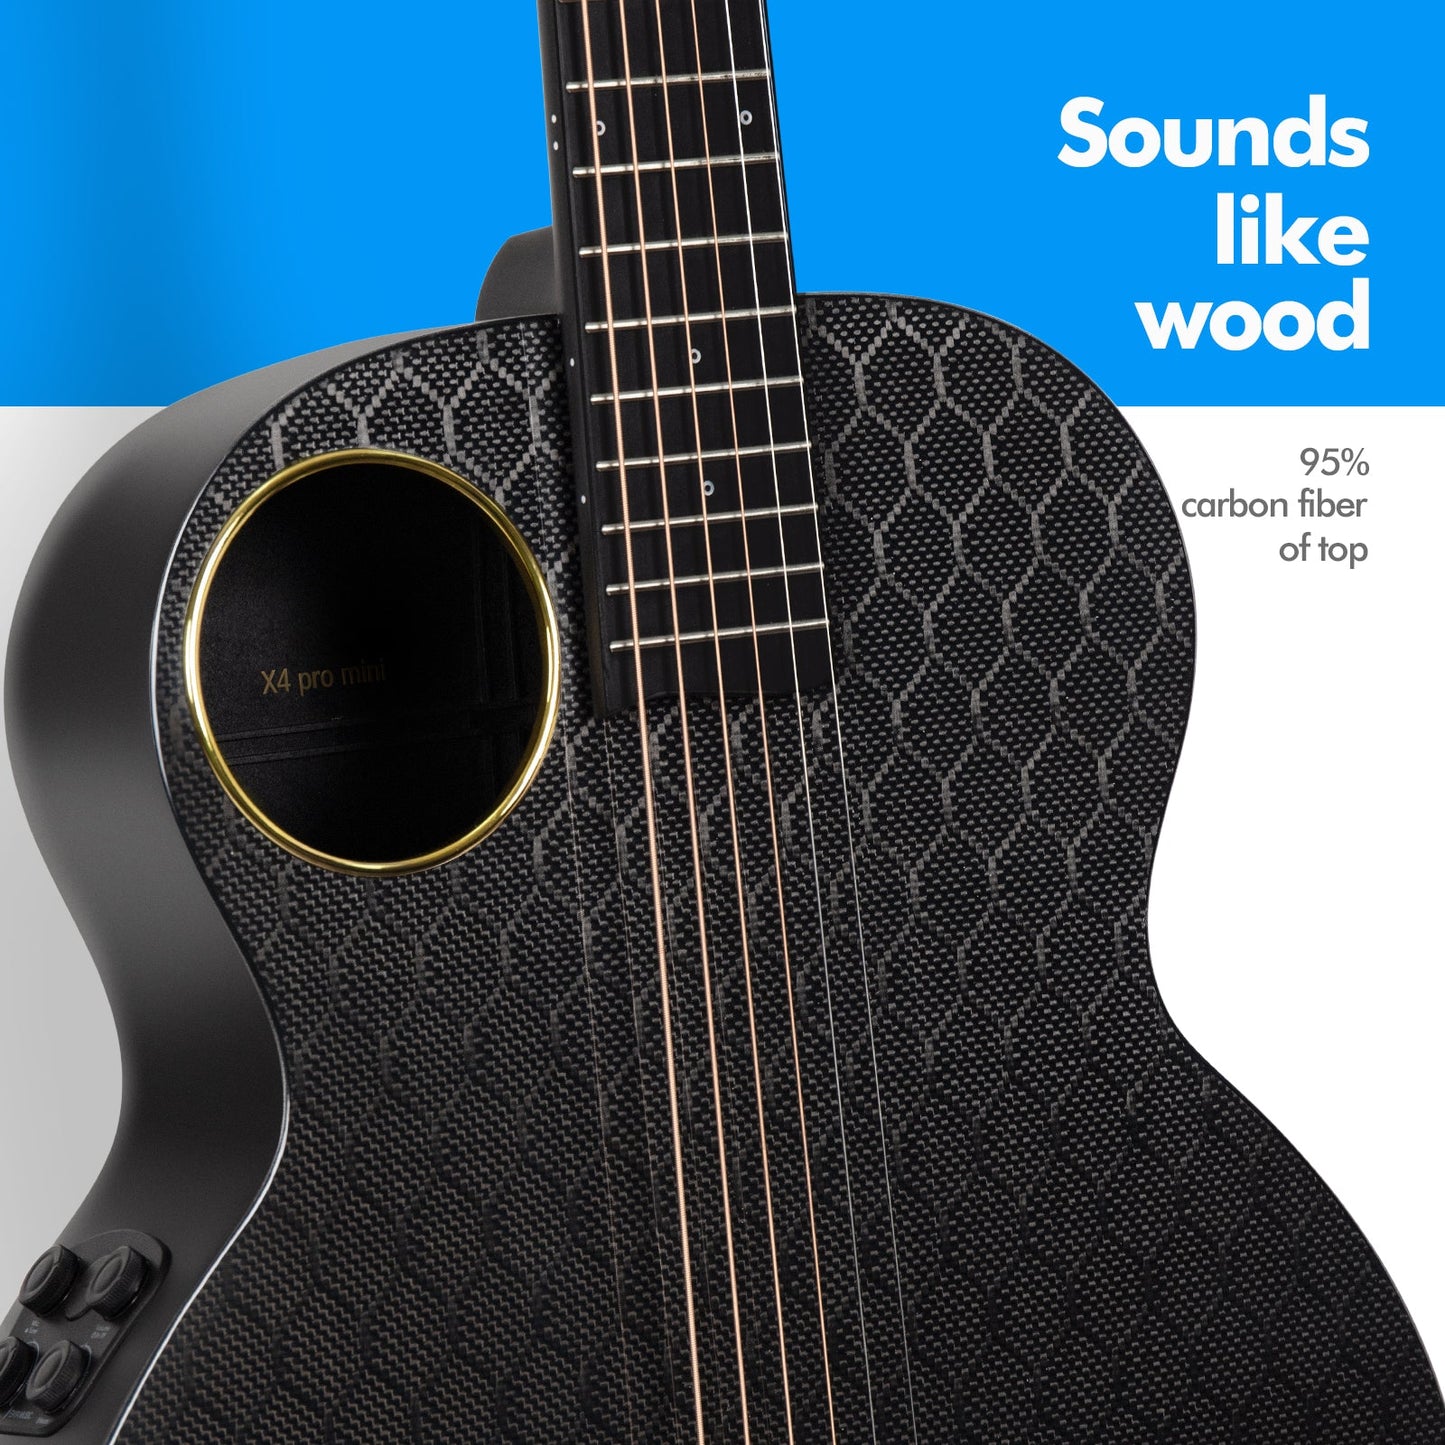 ENYA X4 PRO MINI Carbon Acoustic Guitar